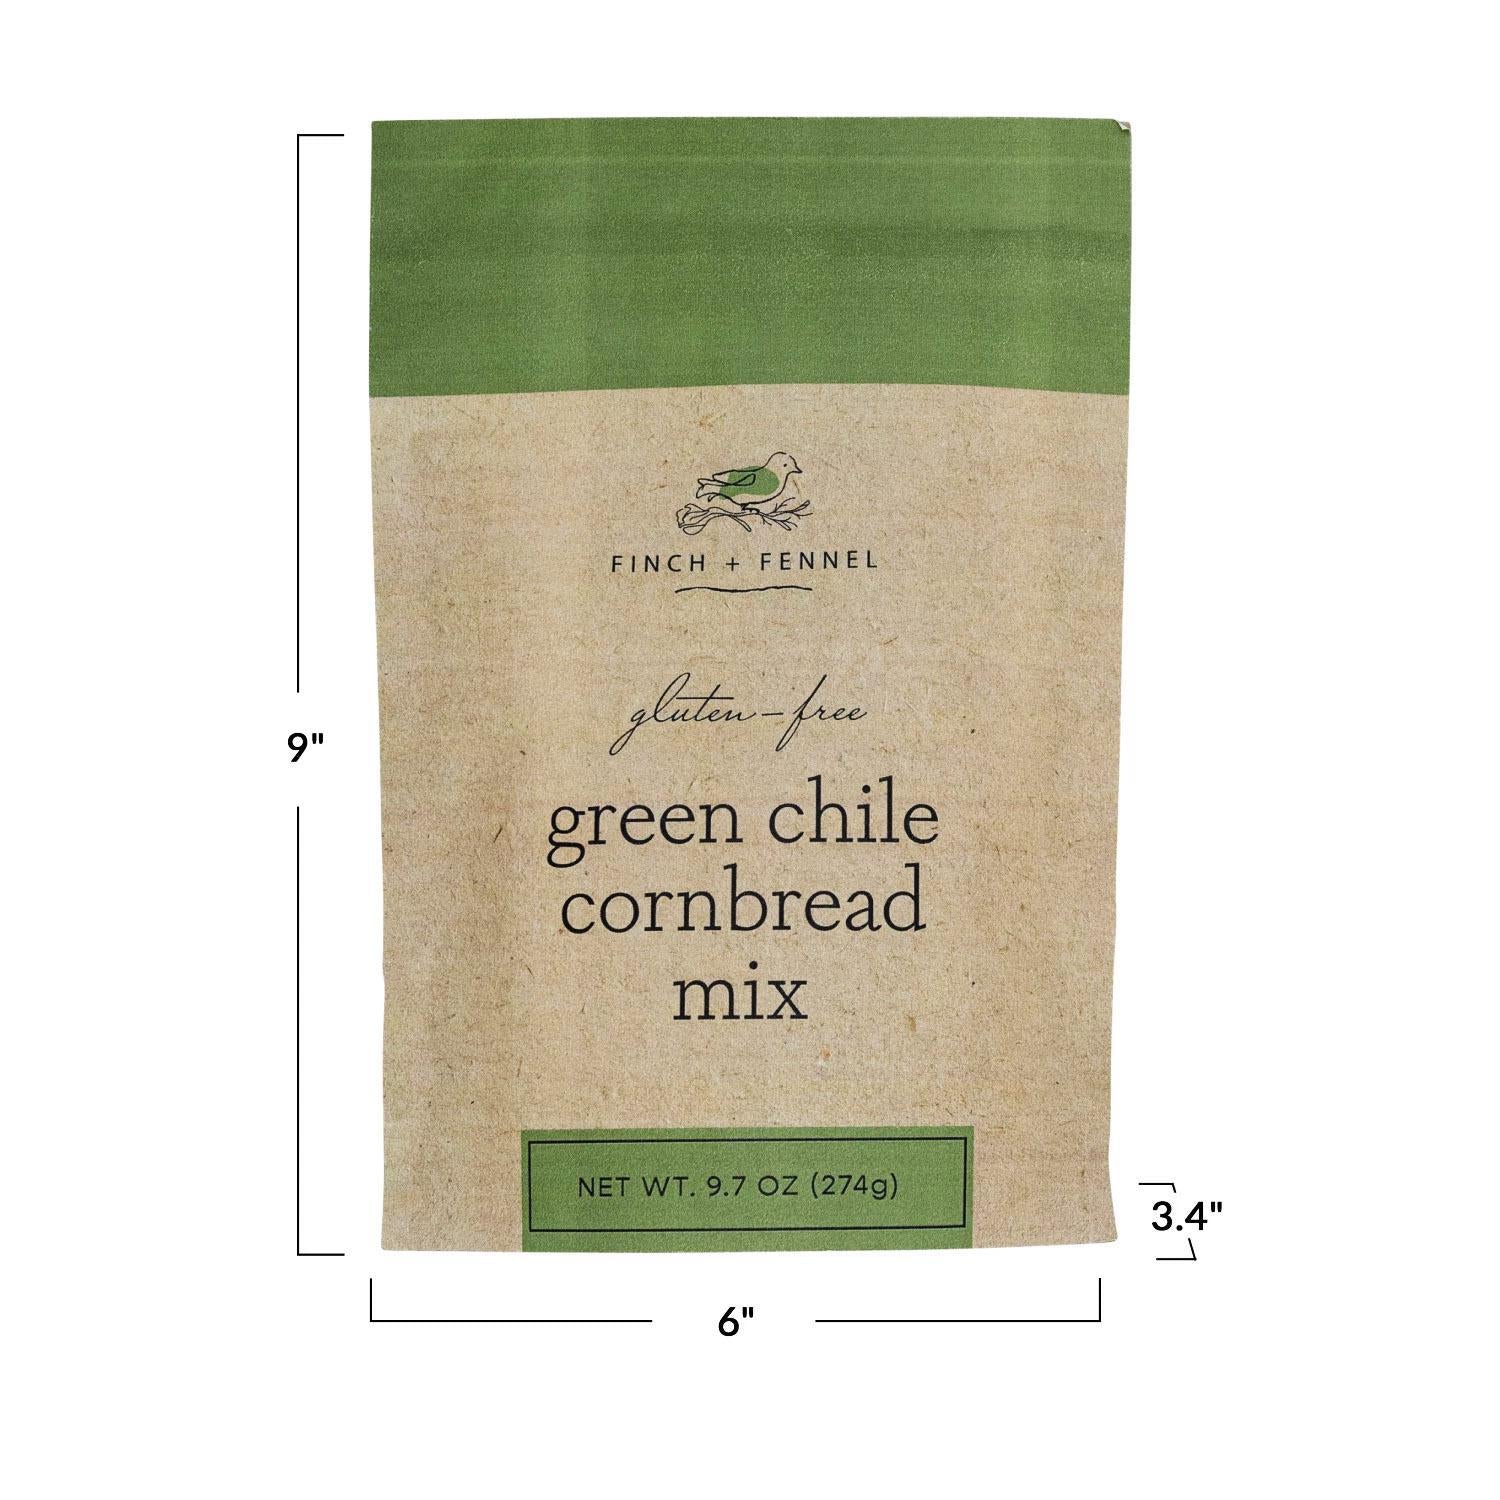 Gluten-Free Green Chile Cornbread Mix: amazing 